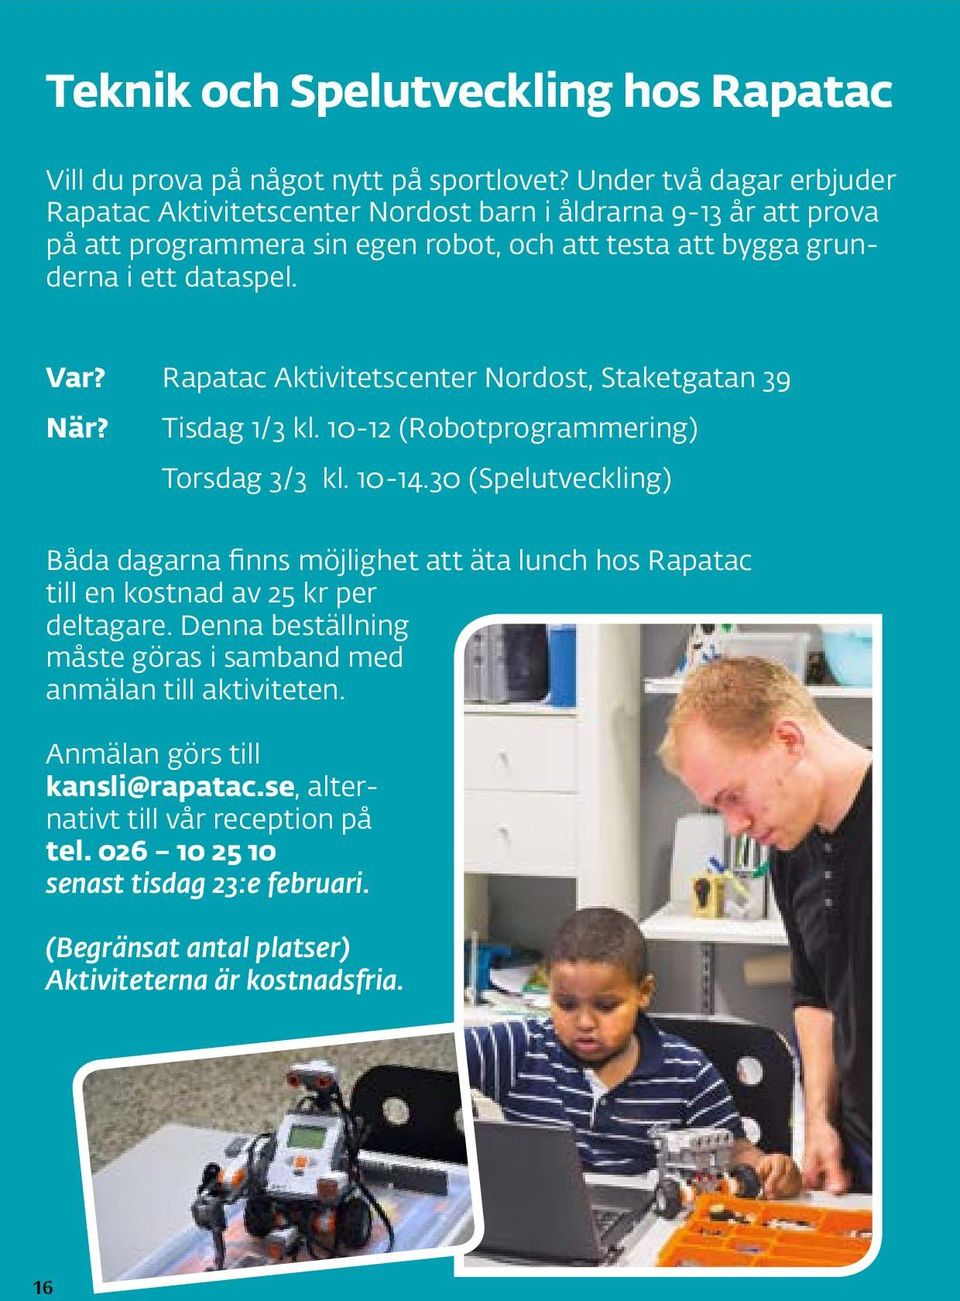 Rapatac Aktivitetscenter Nordost, Staketgatan 39 När? Tisdag 1/3 kl. 10-12 (Robotprogrammering) Torsdag 3/3 kl. 10-14.